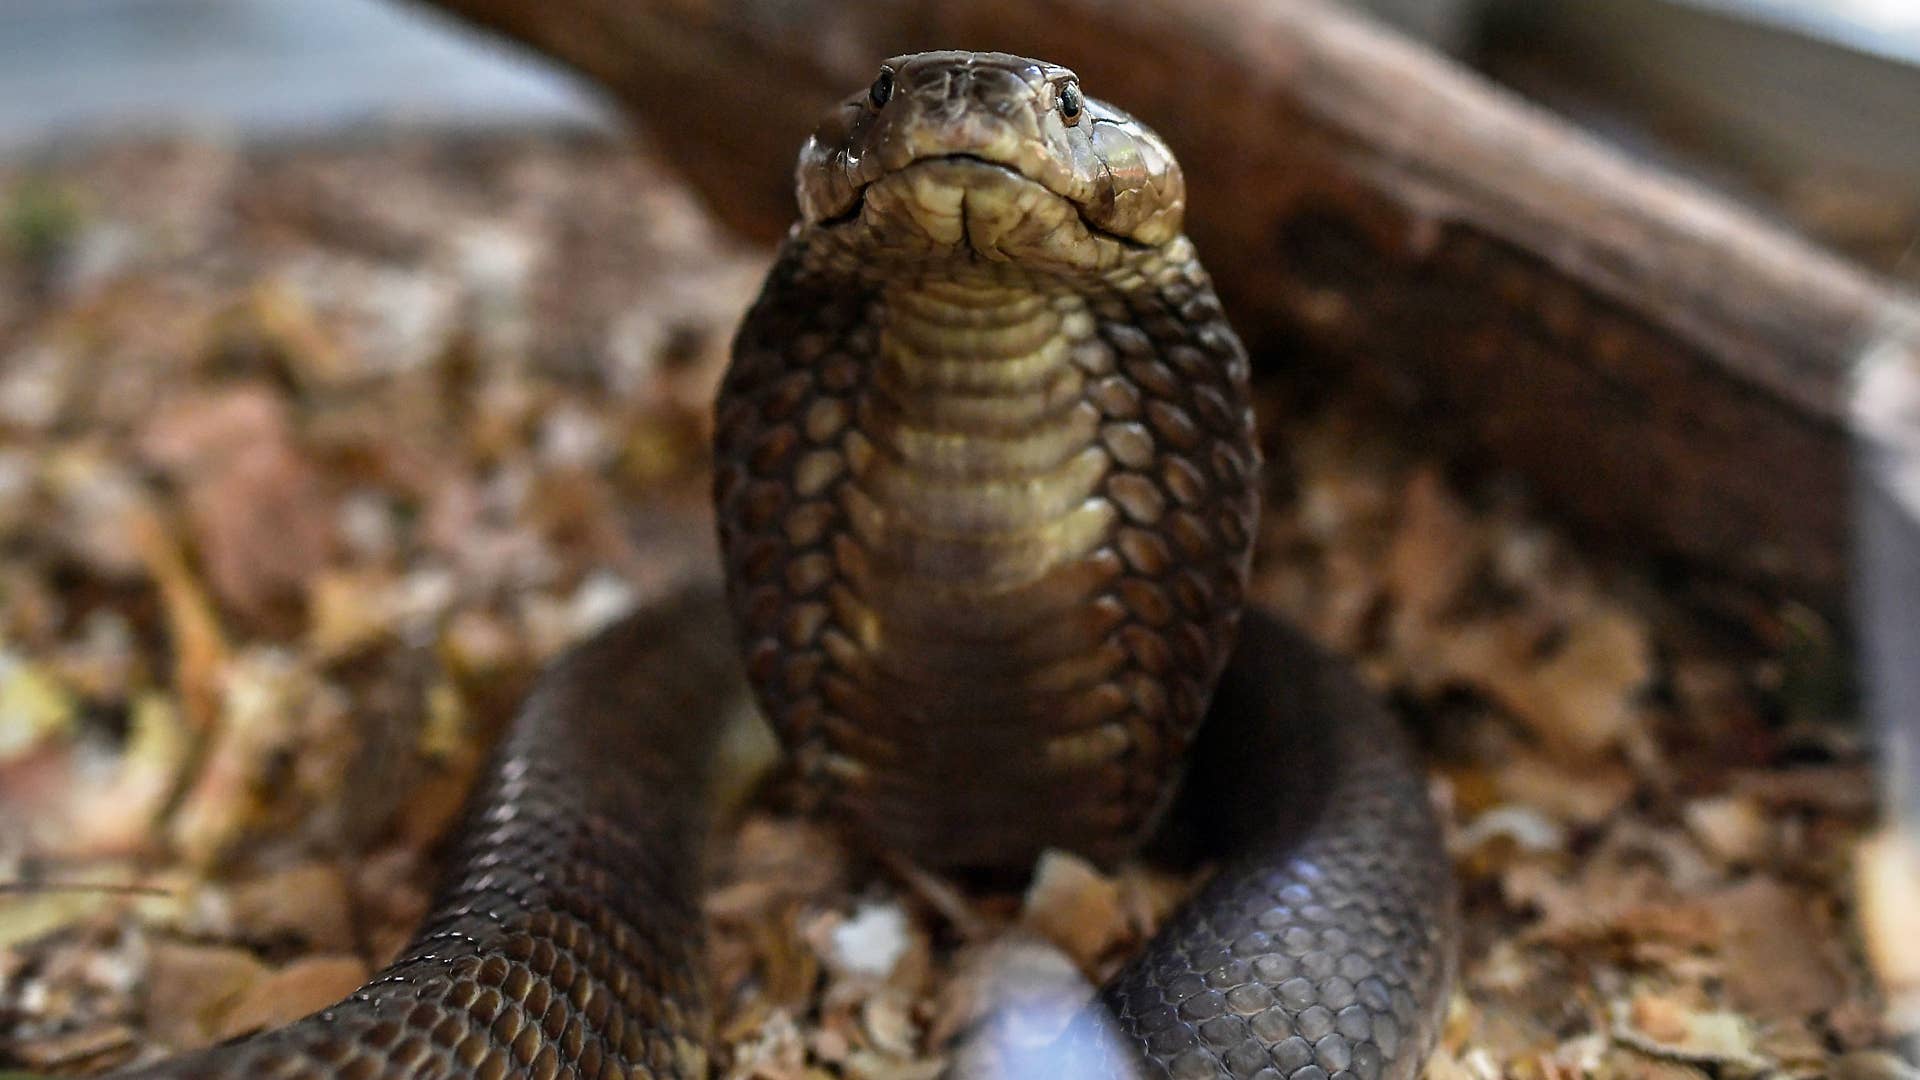 A photo taken of a brown spitting cobra.